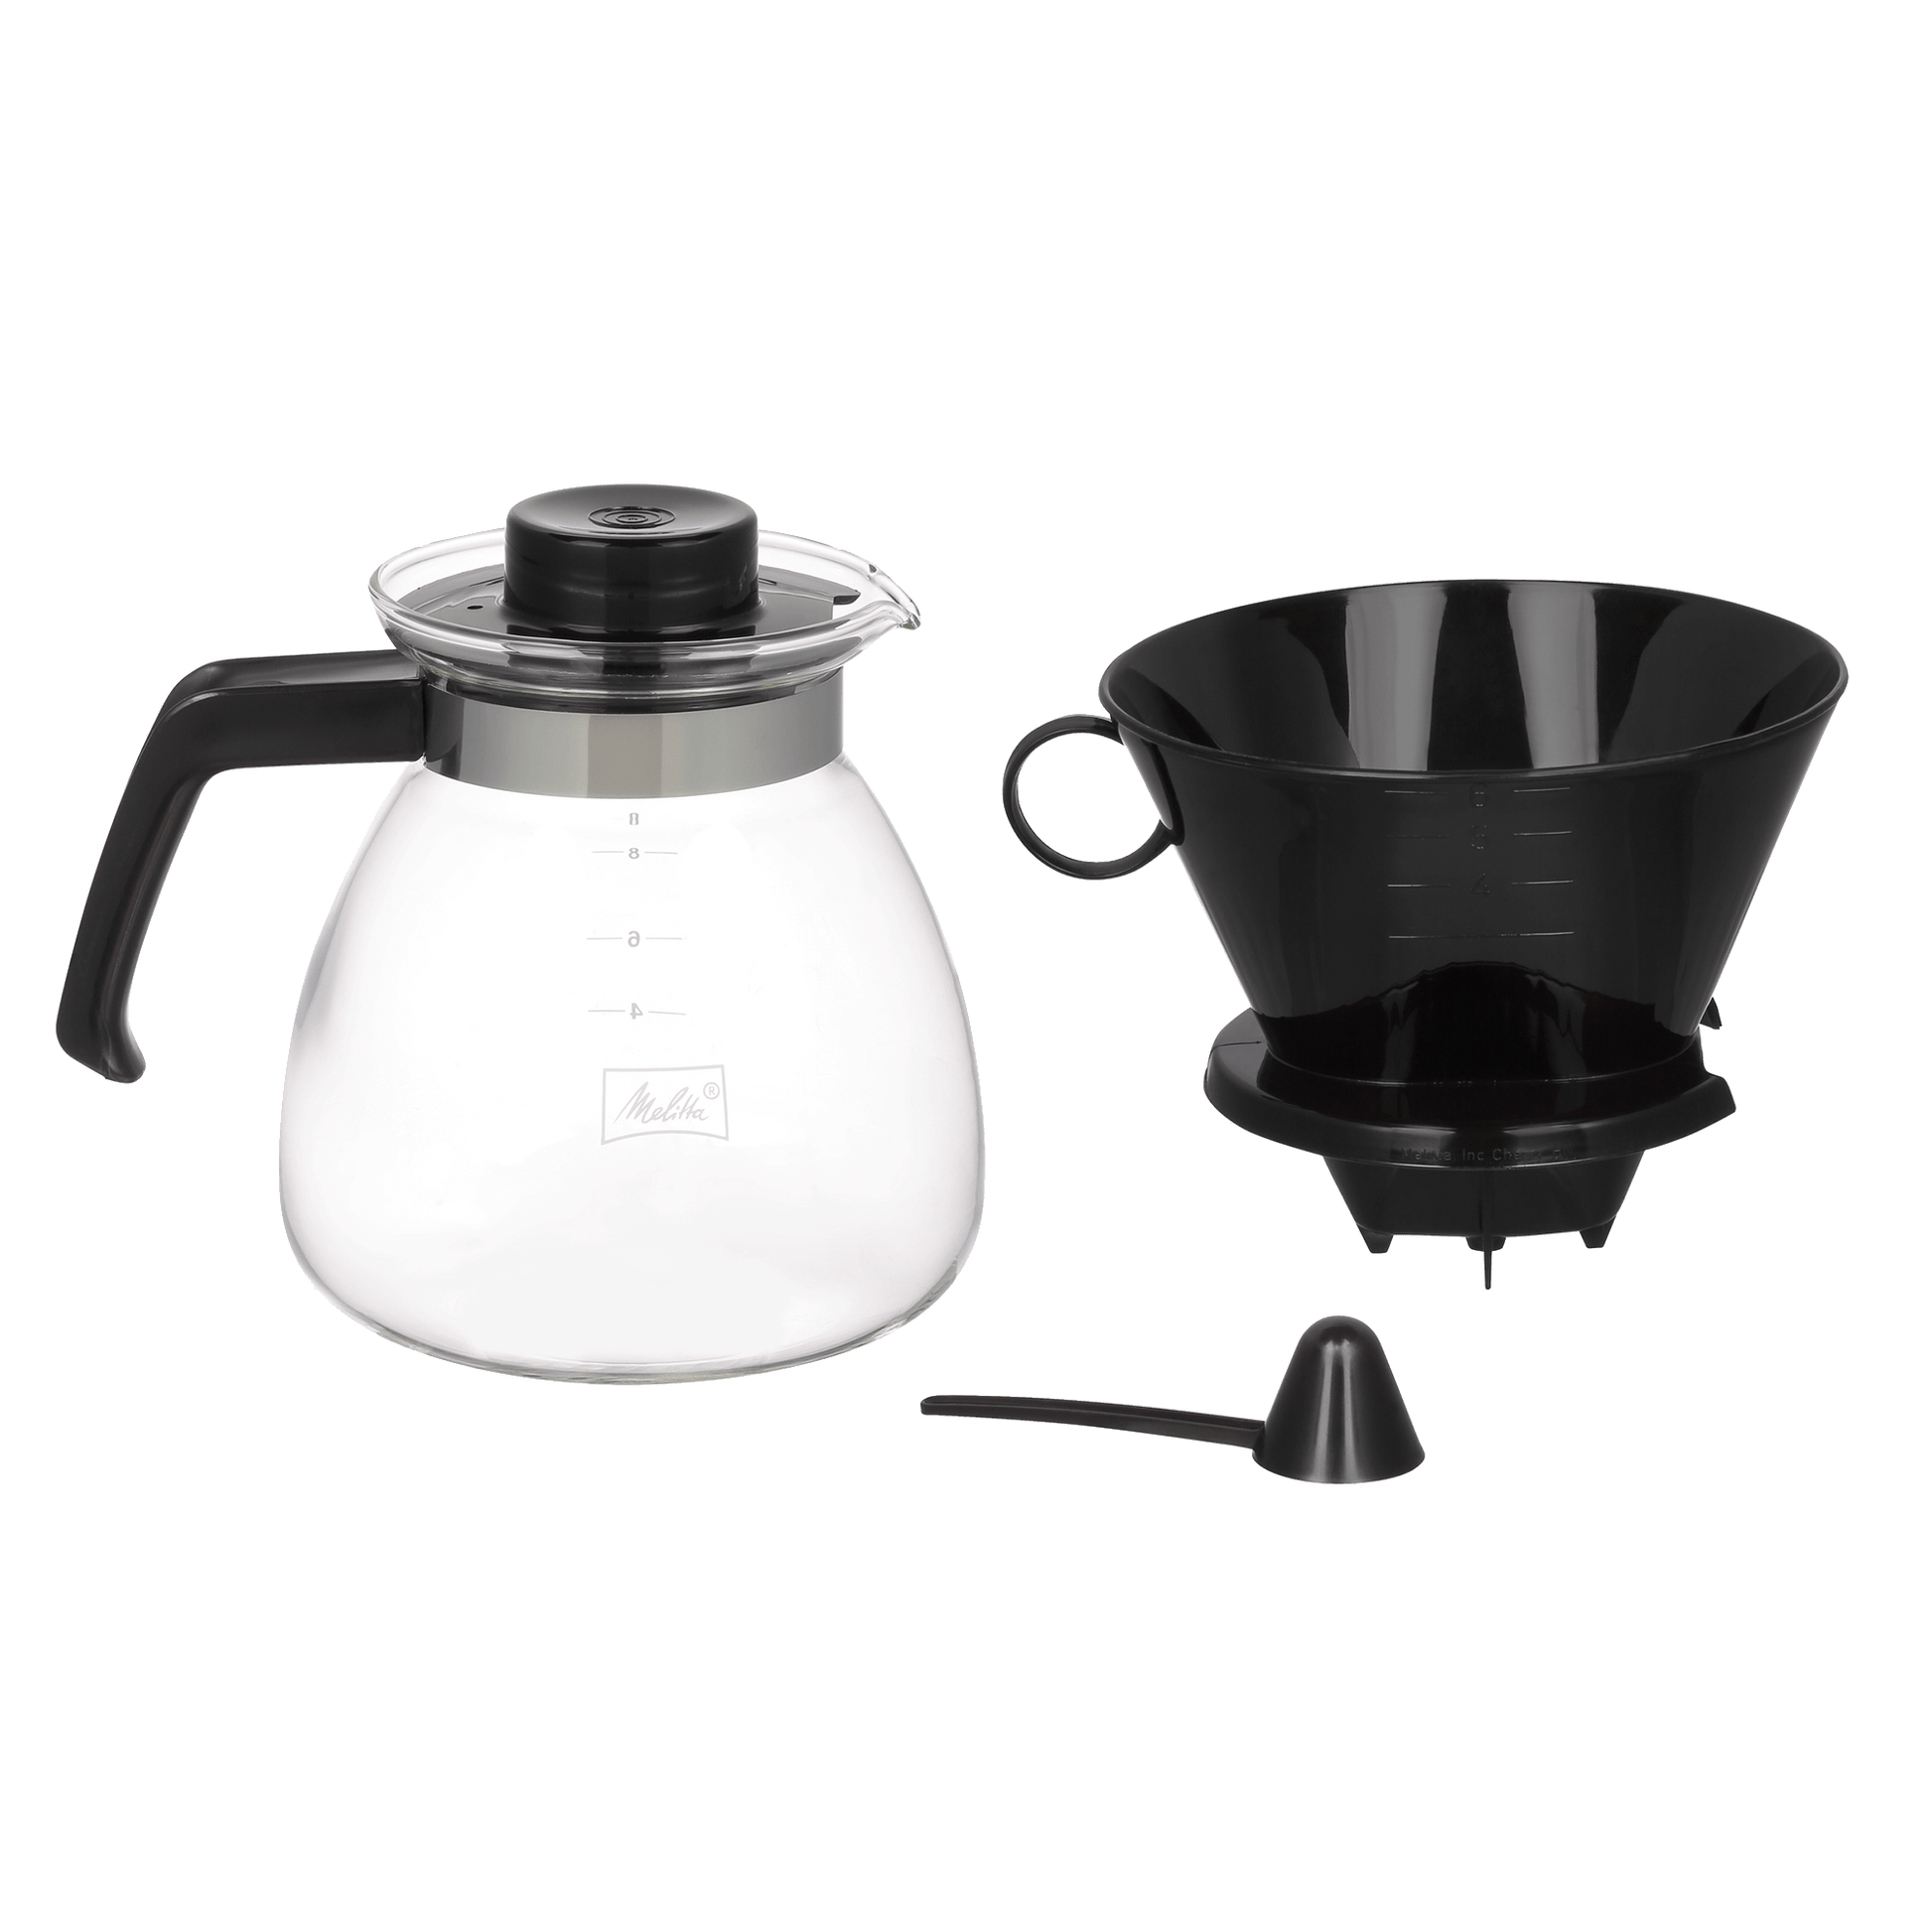 Melitta 10 Cup Coffee Maker Thermal Carafe Model #46892